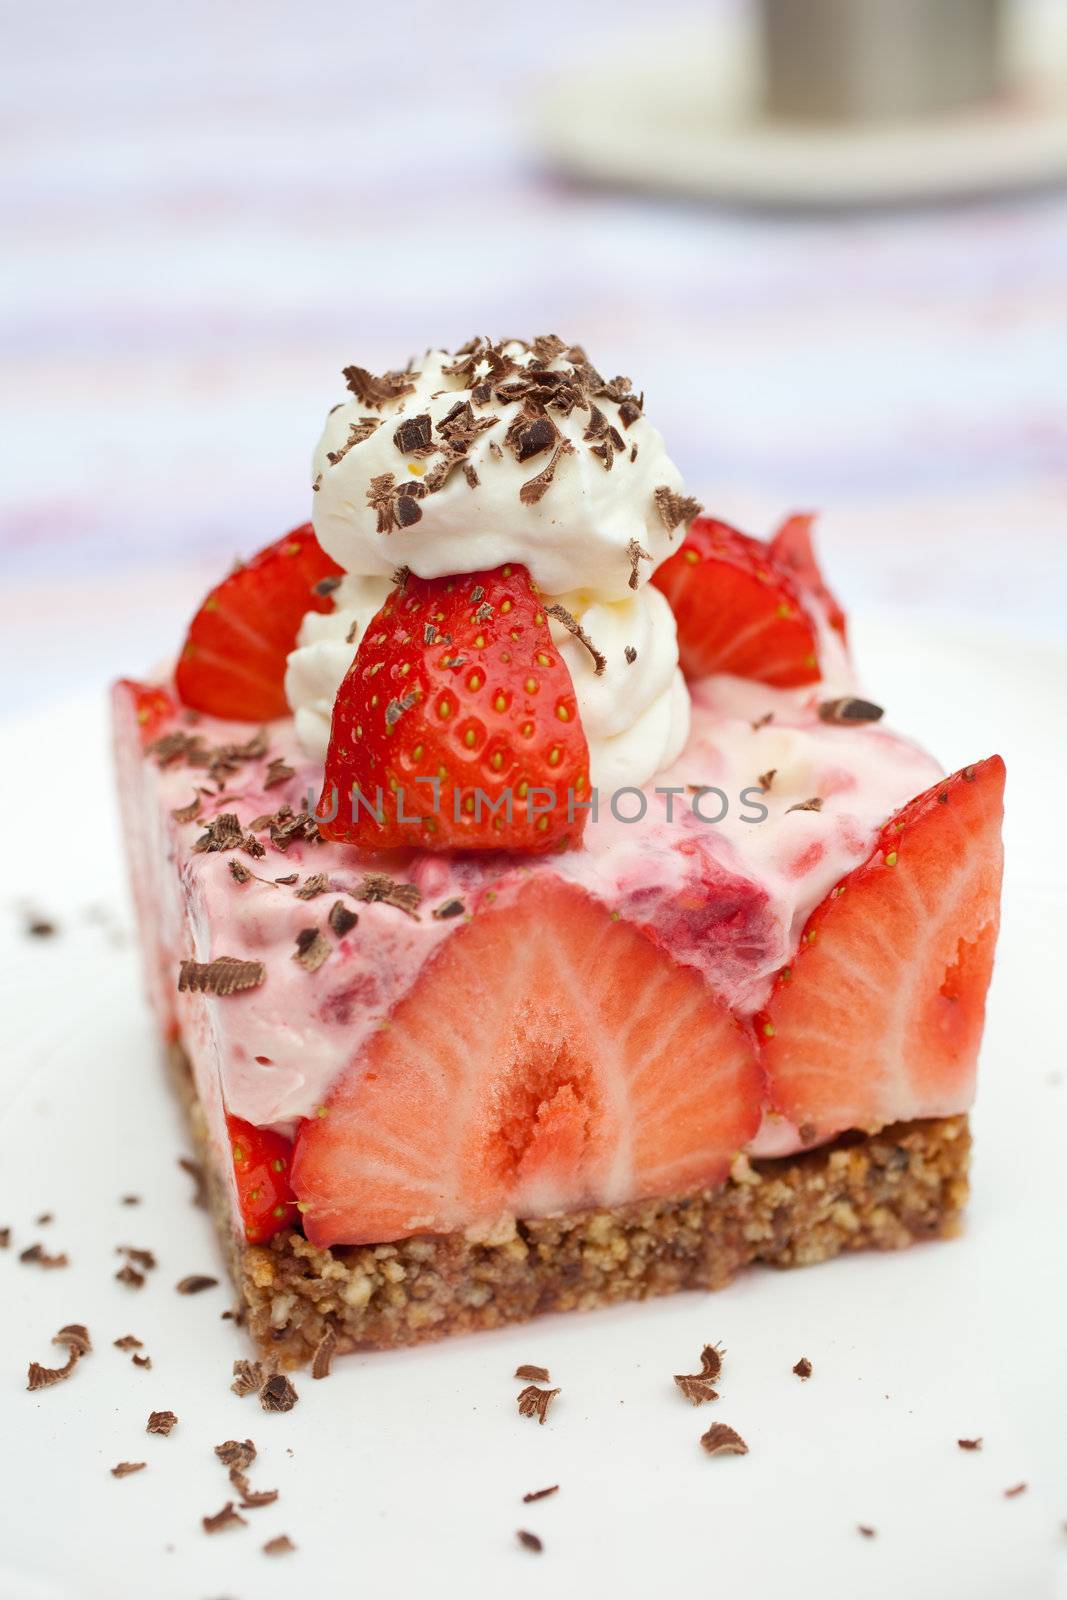 Delicious creamy dessert with strawberries and cream